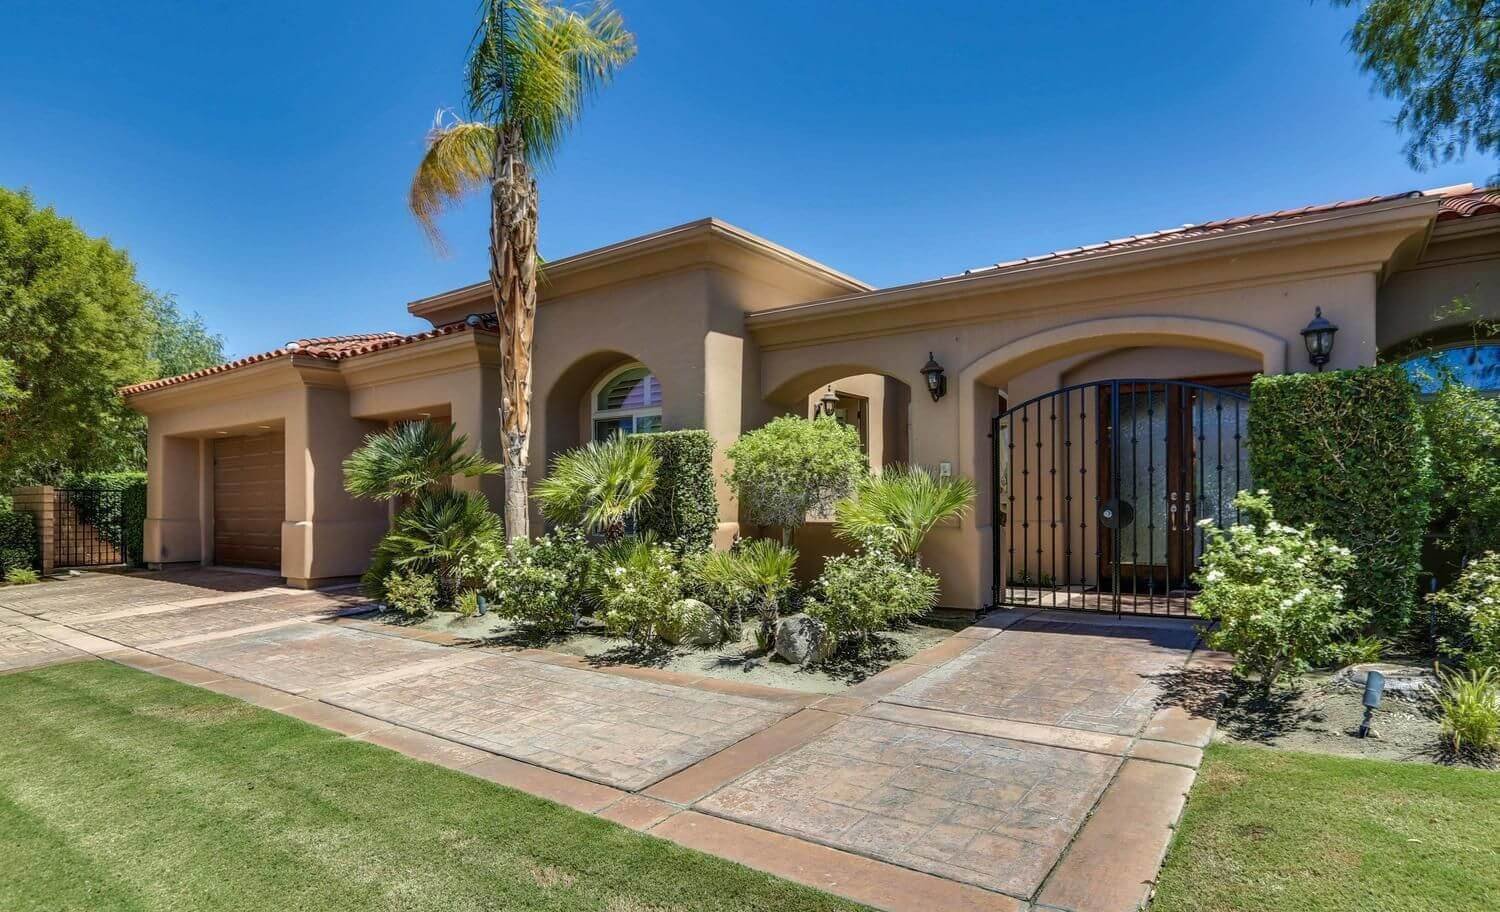 Carrera Estates Rancho Mirage 92270